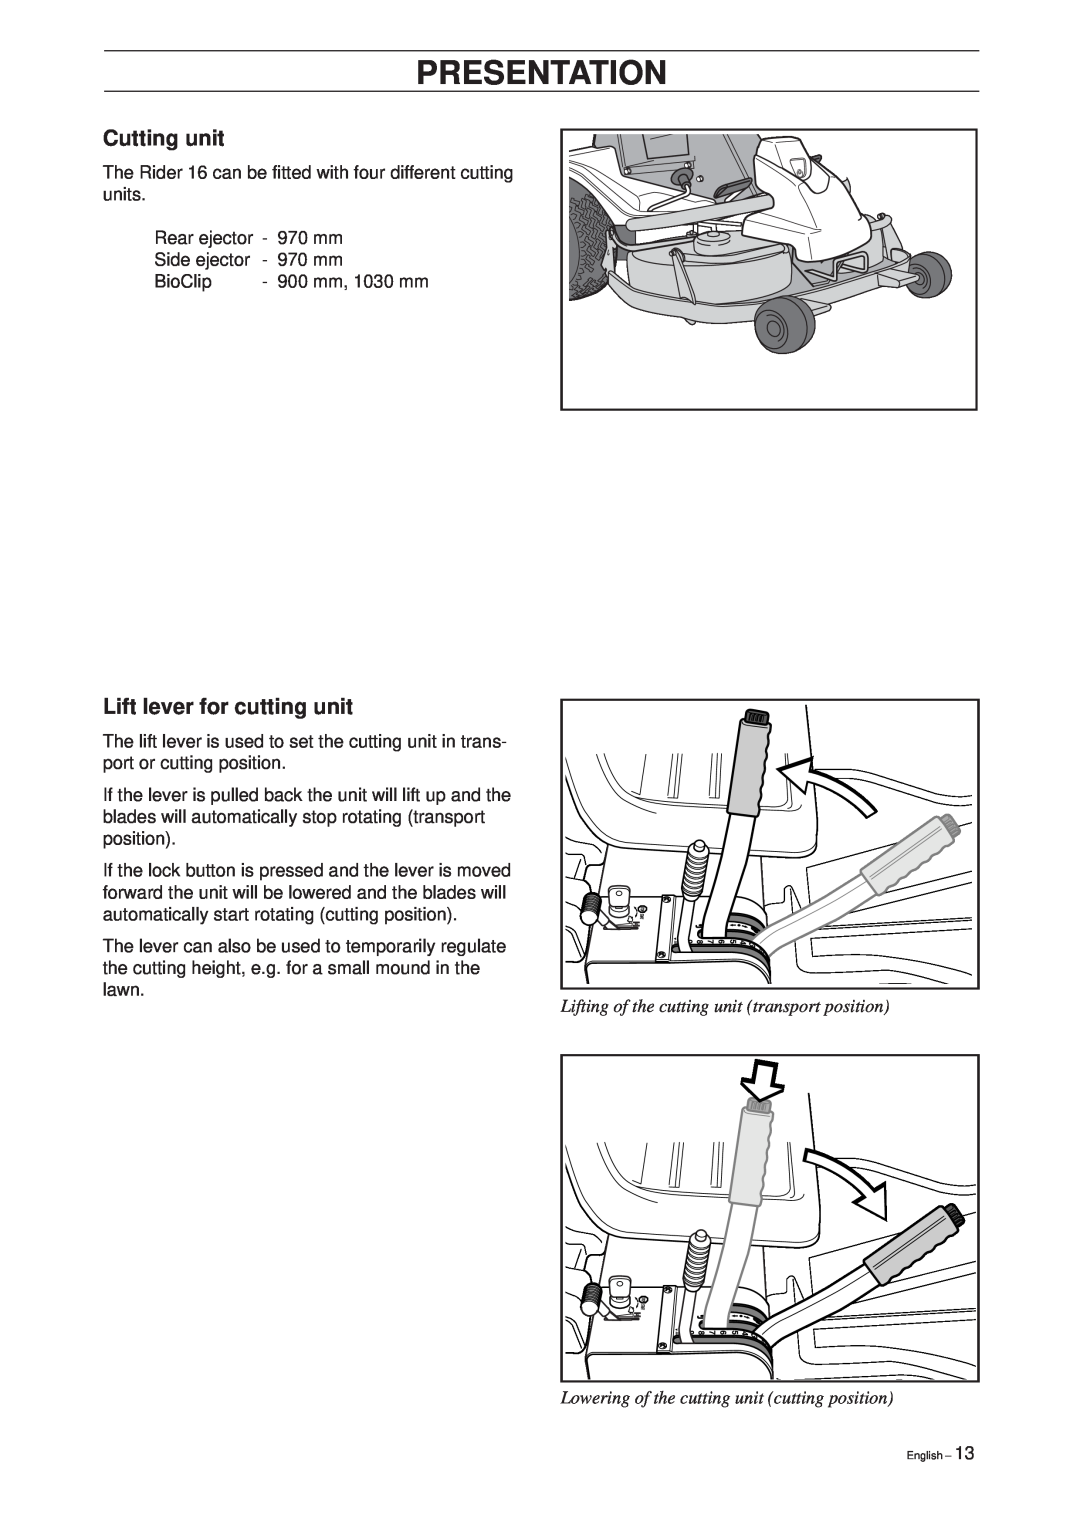 Husqvarna Rider 16 Cutting unit, Lift lever for cutting unit, Lifting of the cutting unit transport position, Presentation 